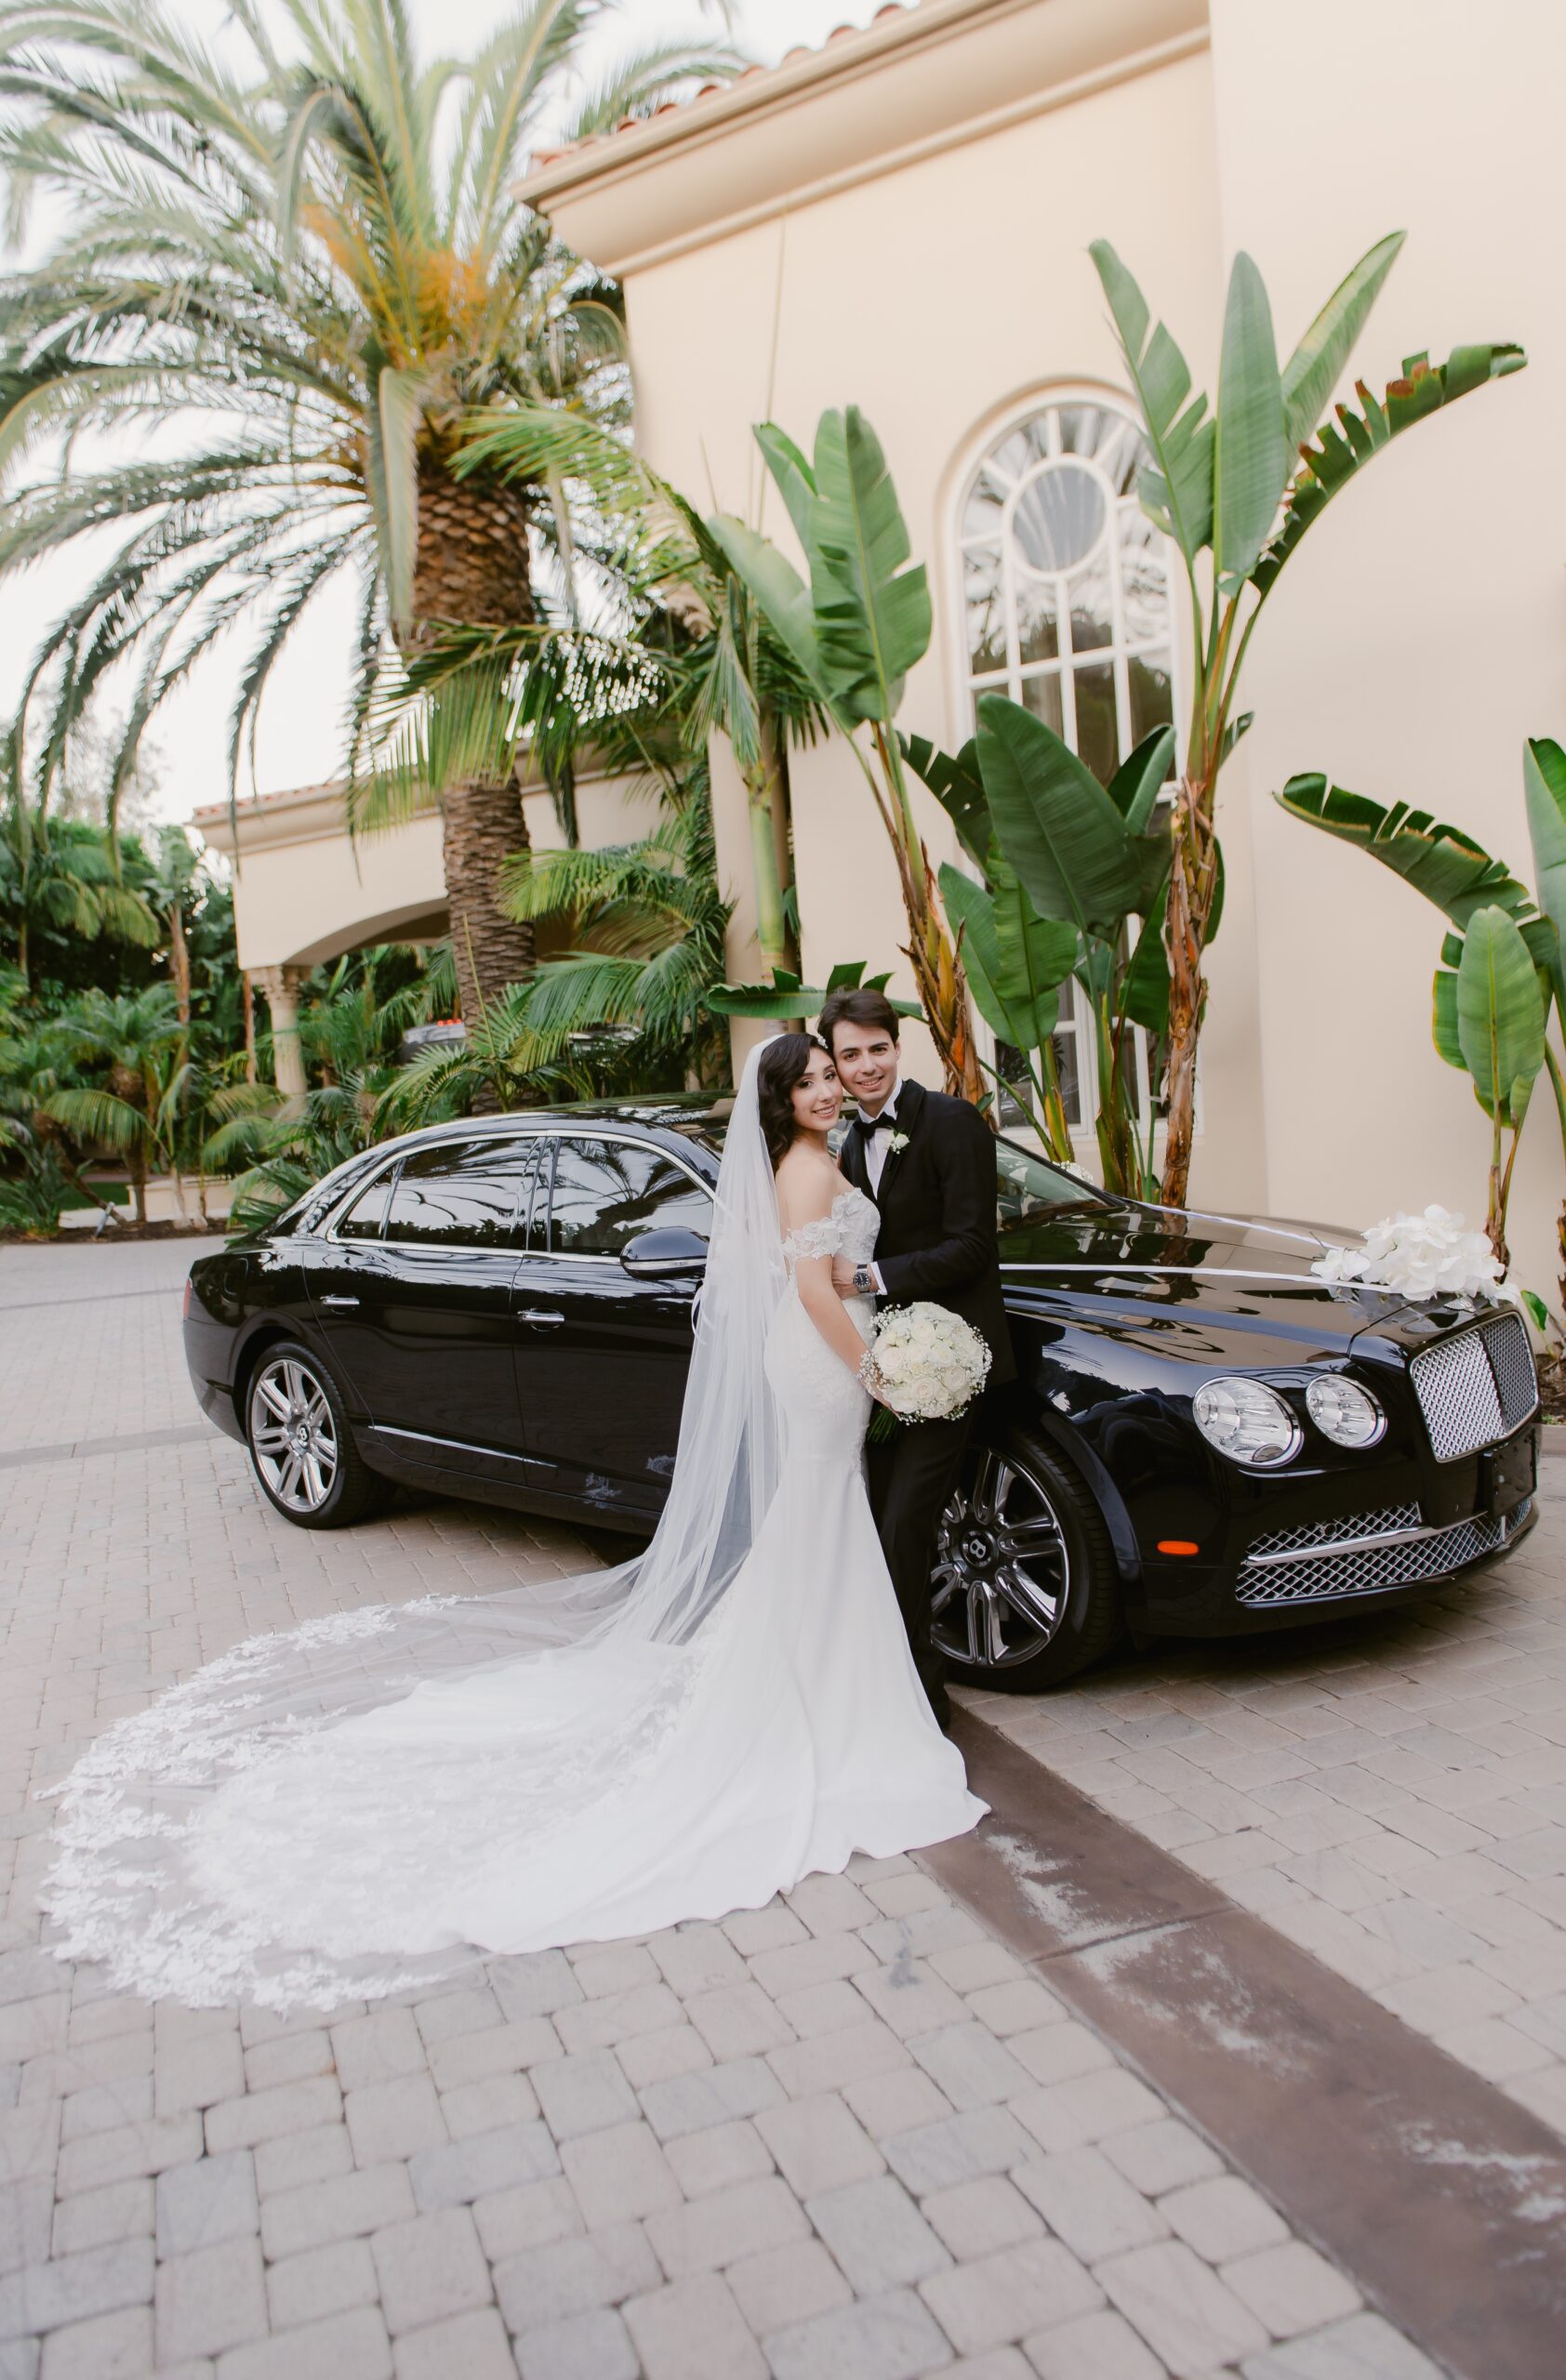 Capturing Everlasting Love: A Breathtaking Orange County Mansion Wedding